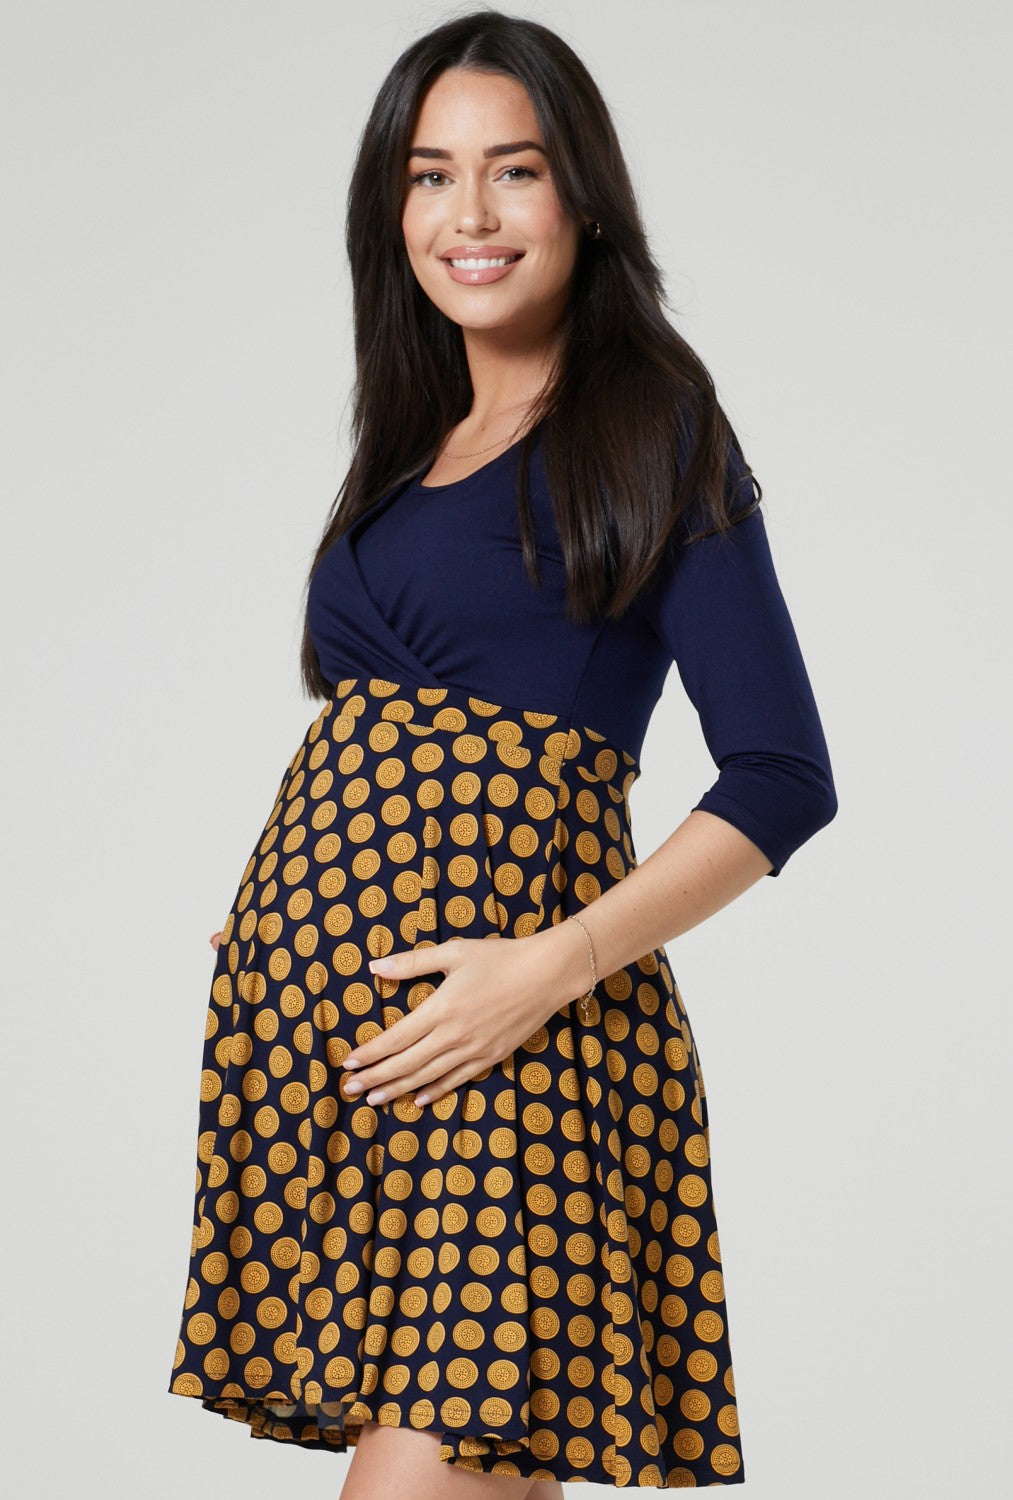 Maternity Nursing Dress Printed